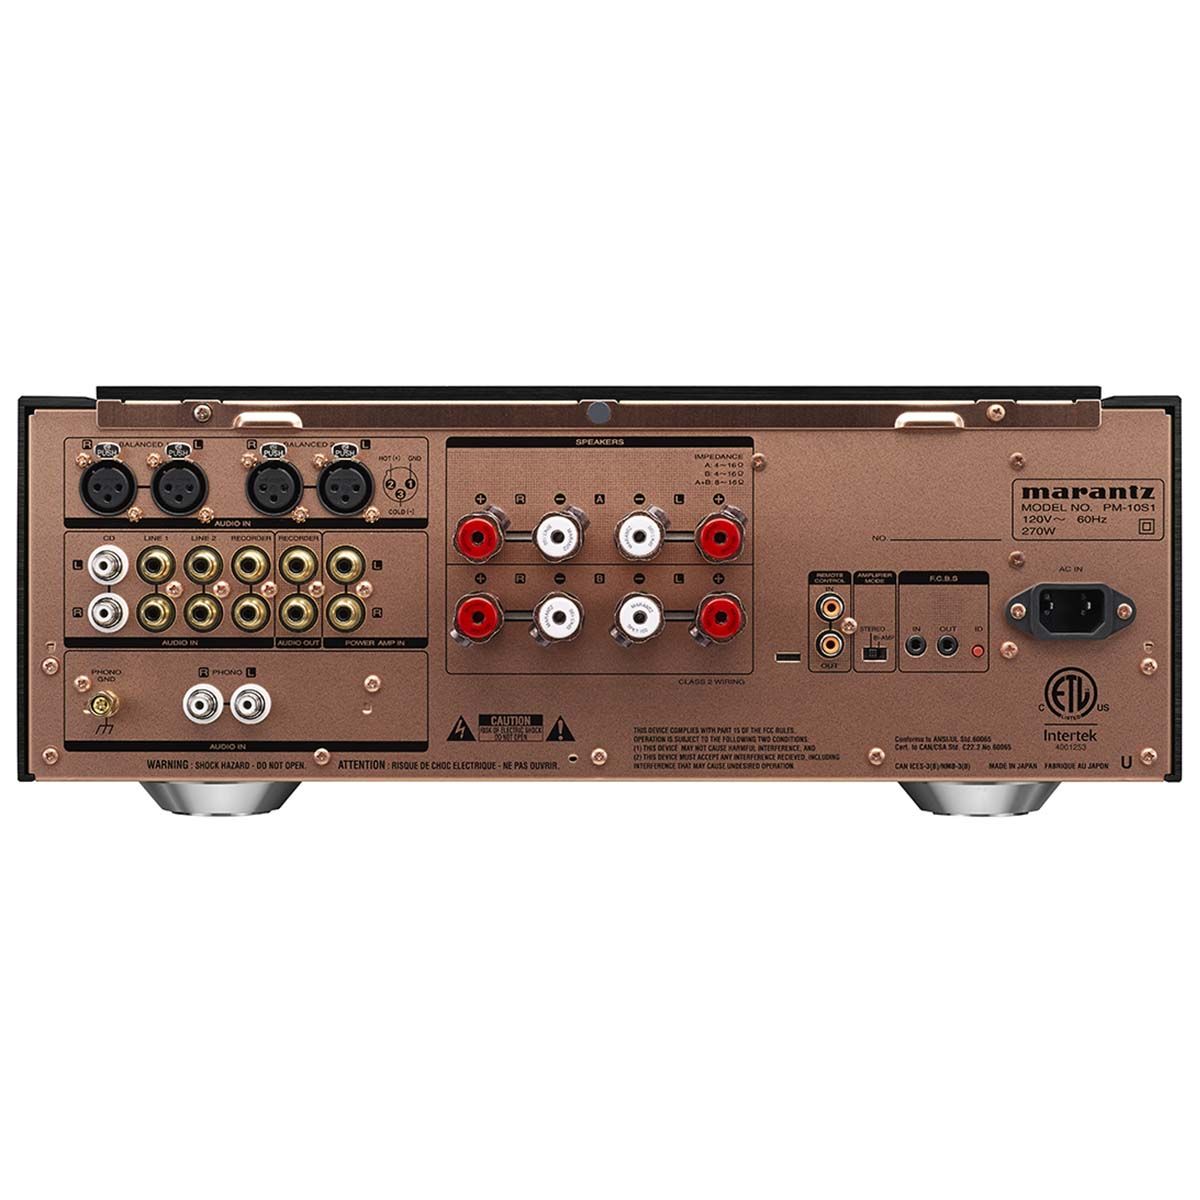 Marantz PM-10 Integrated Amplifier, rear panel view